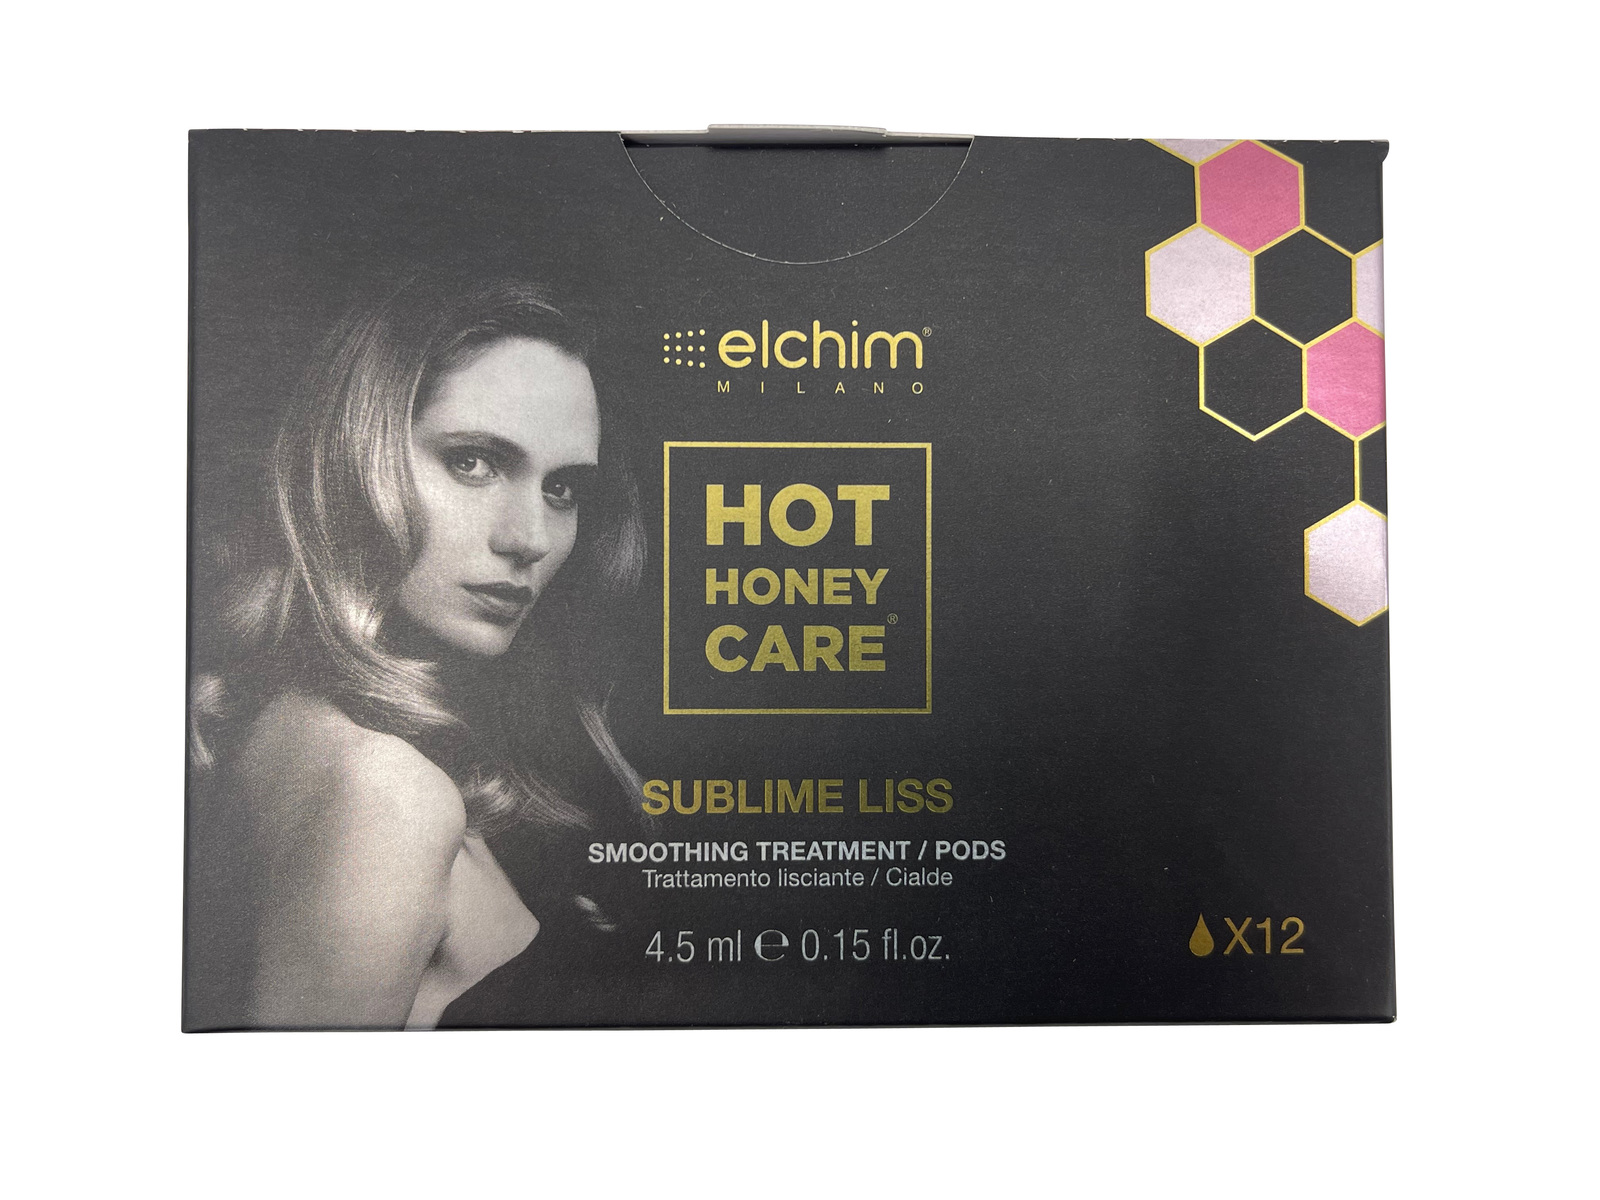 Elchim Milano Hot Honey Care Sublime Liss Smoothing Treatment Pods 0.15 oz. x 12 - $16.91